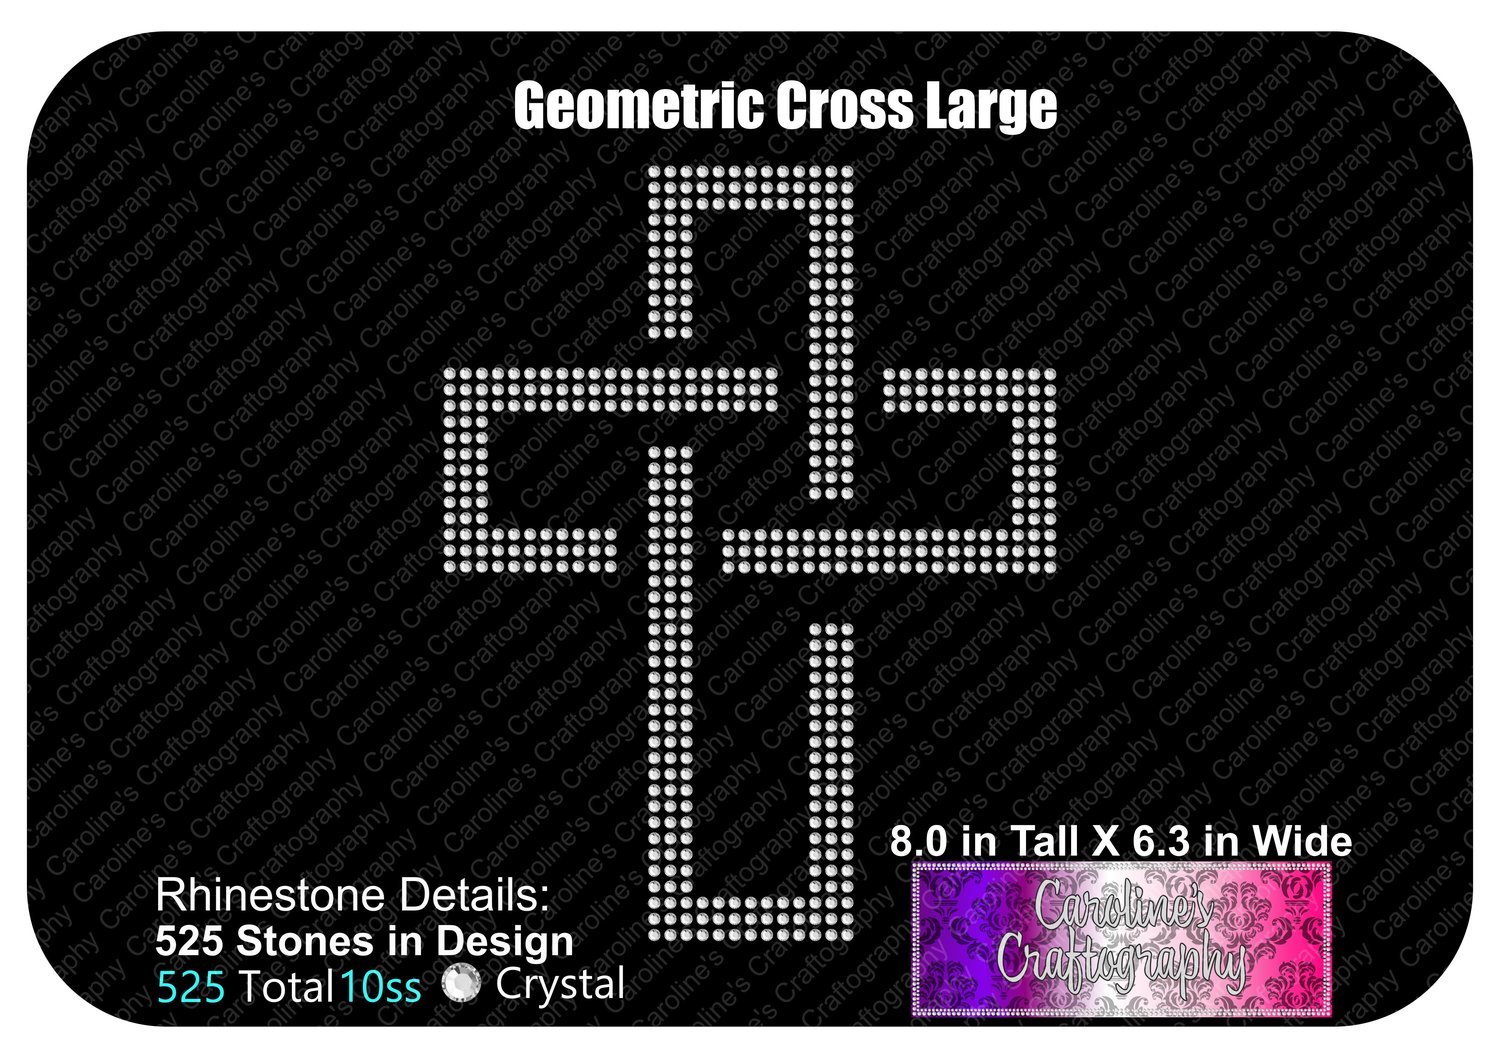 Geometric Cross Large